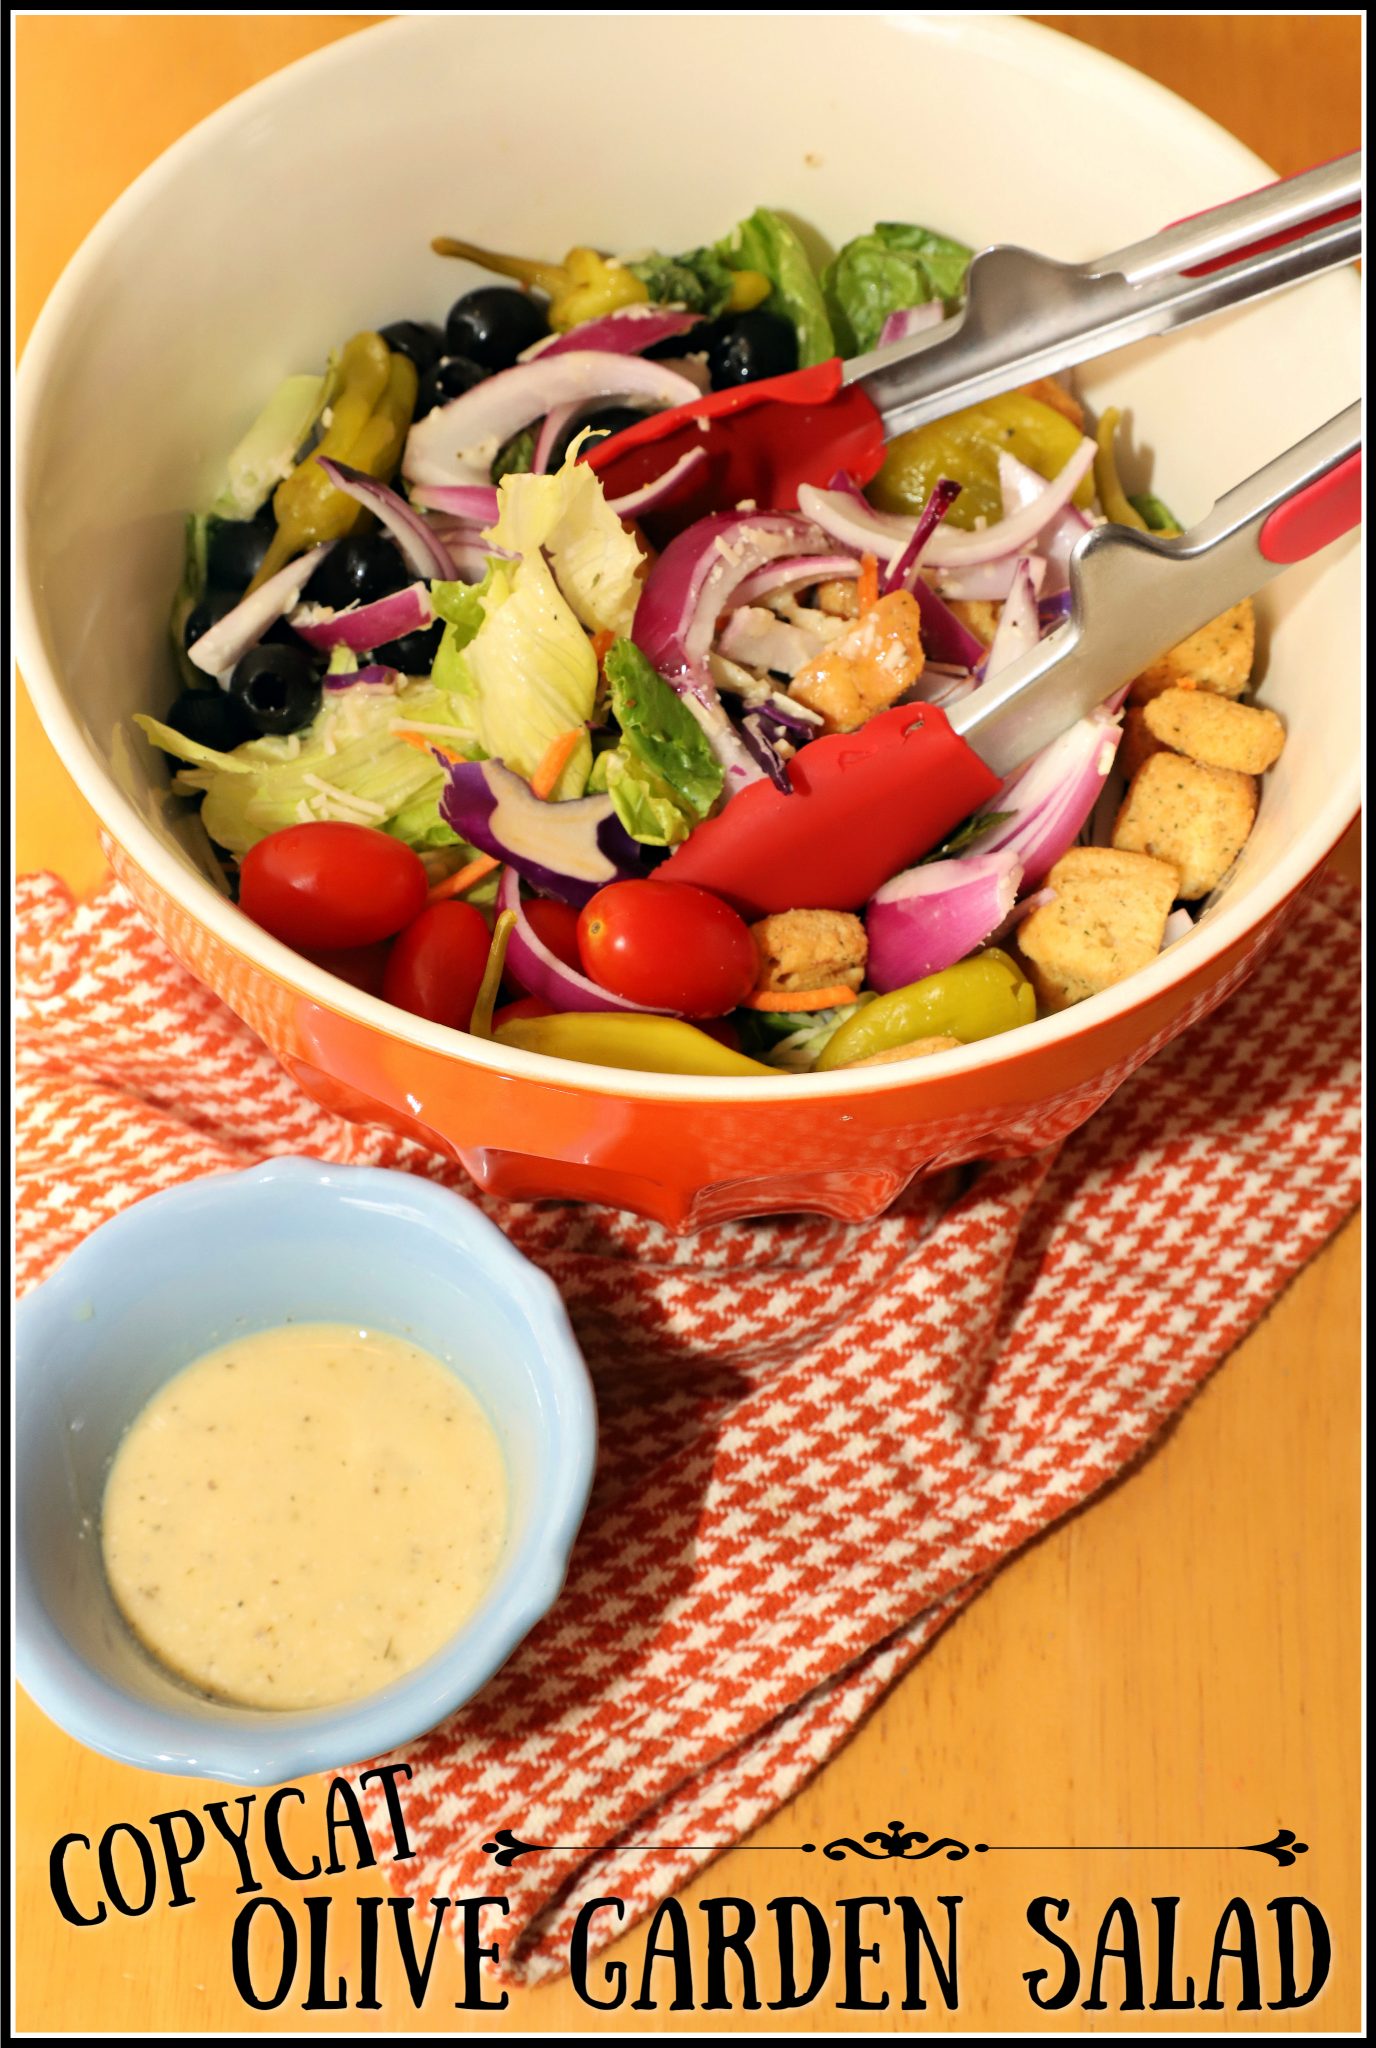 Olive Garden Salad Dressing recipe